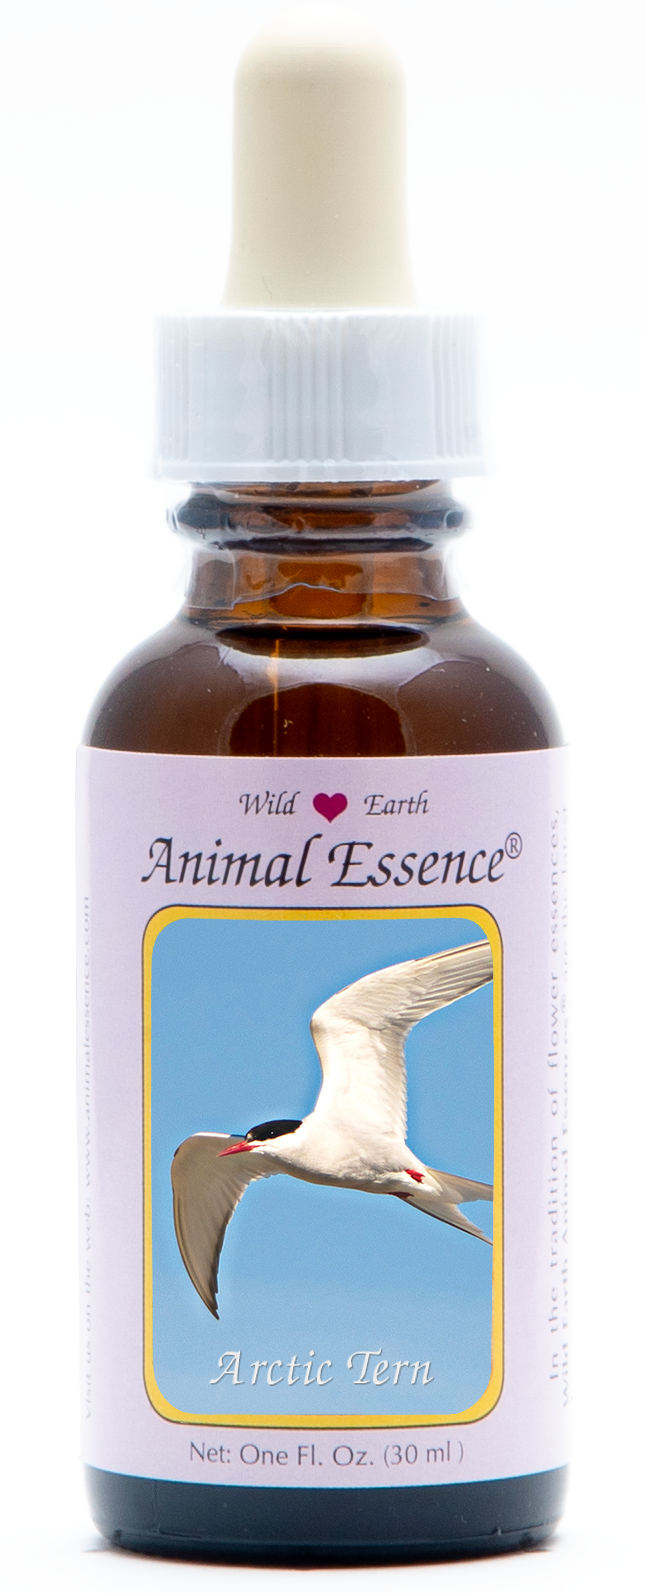 Arctic tern animal essence 30ml